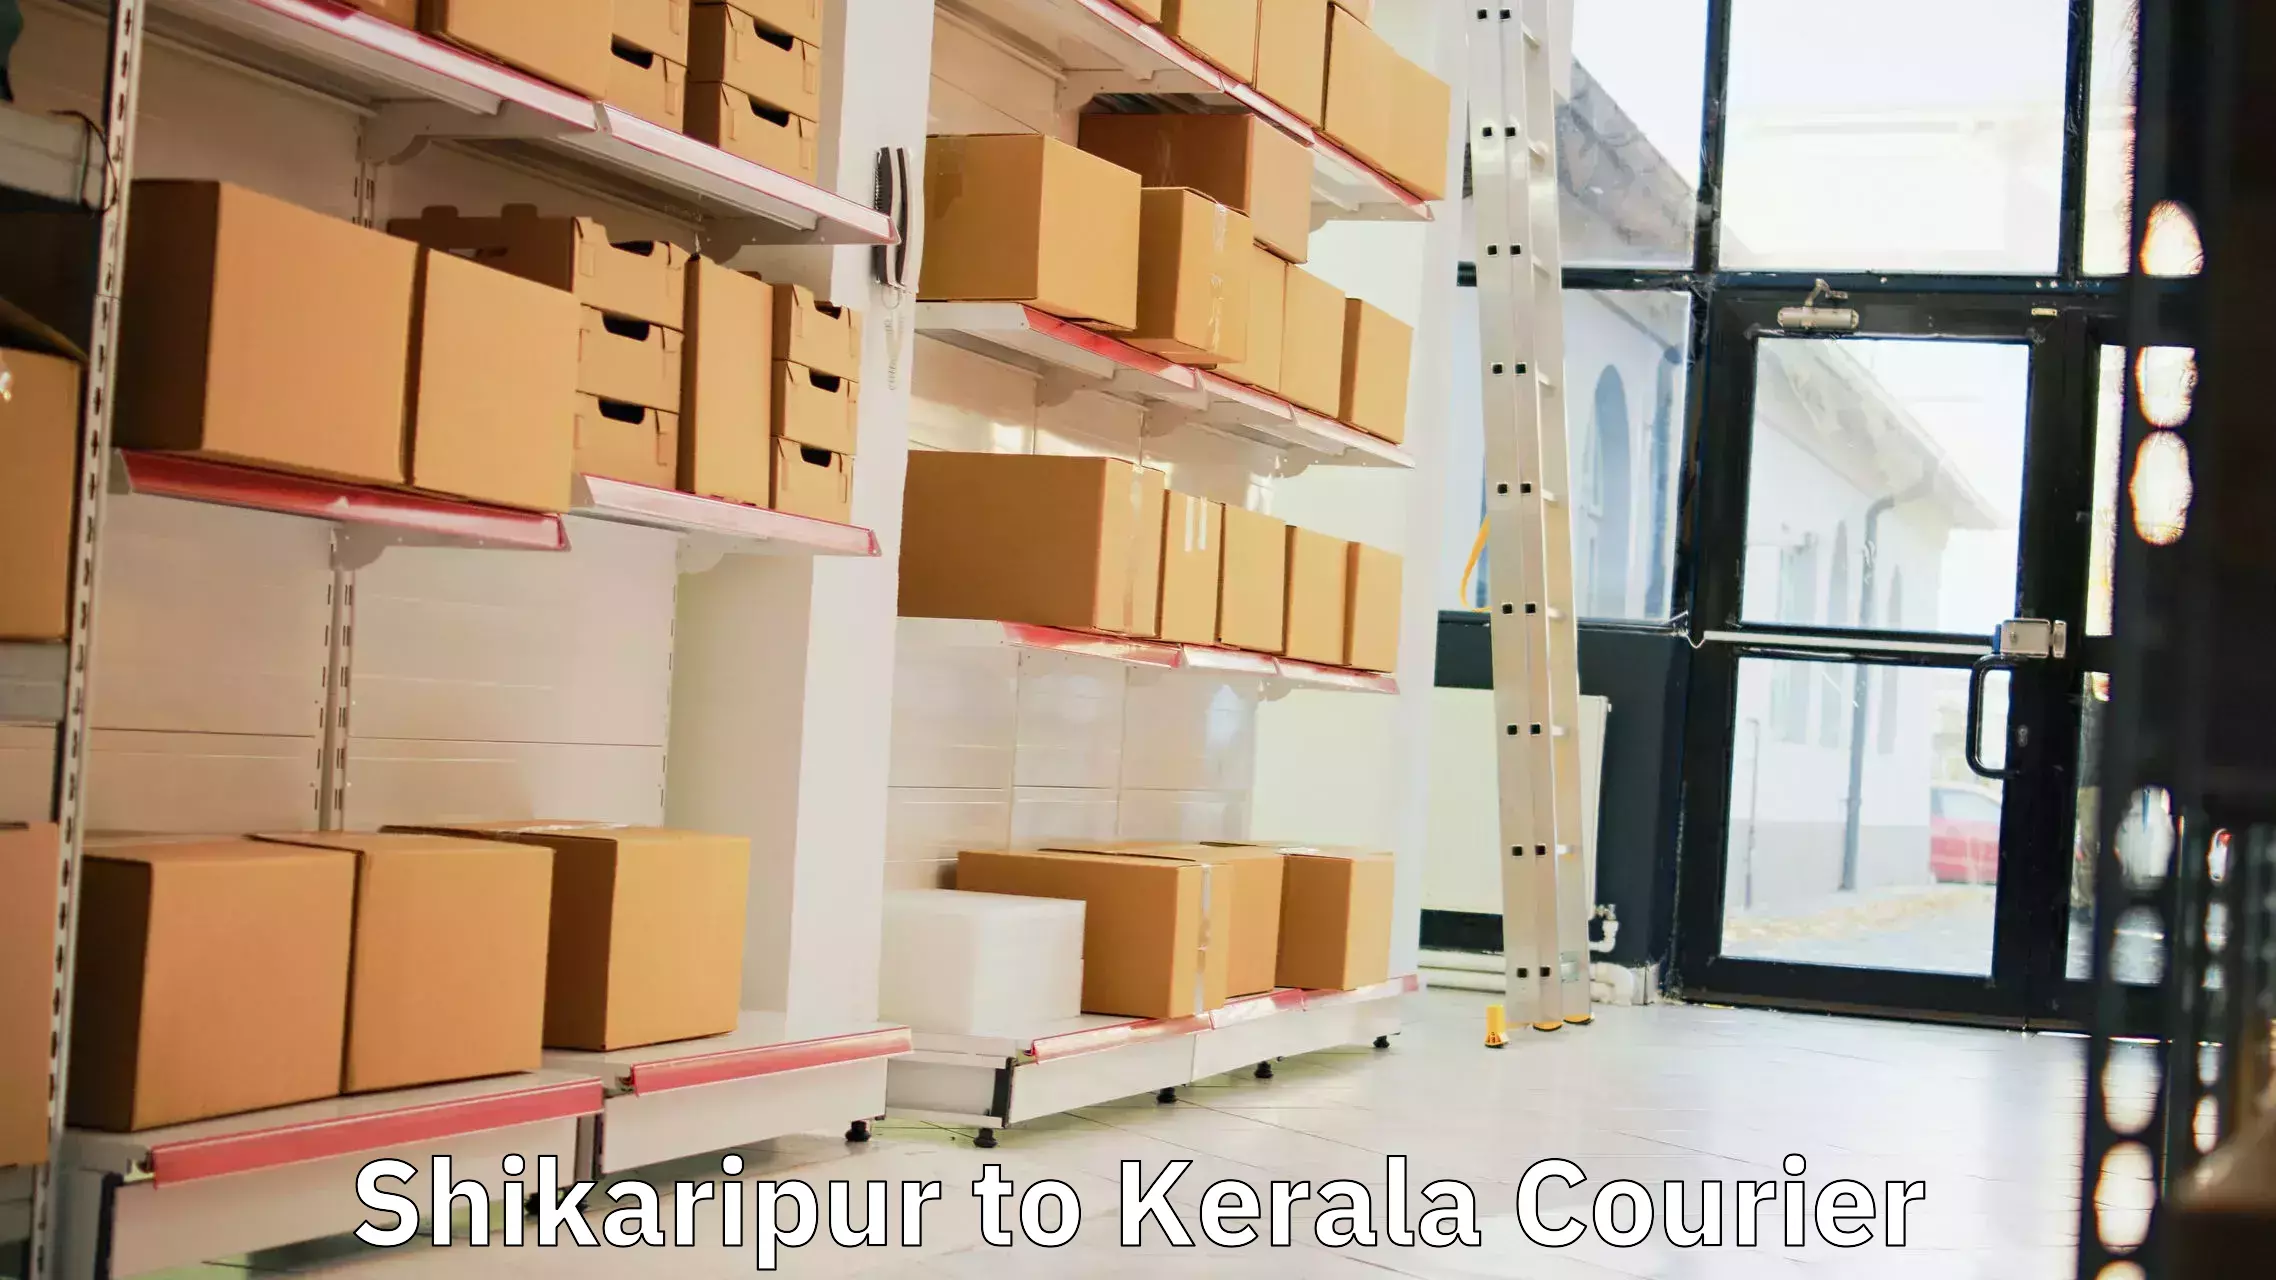 Nationwide delivery network Shikaripur to Cochin Port Kochi